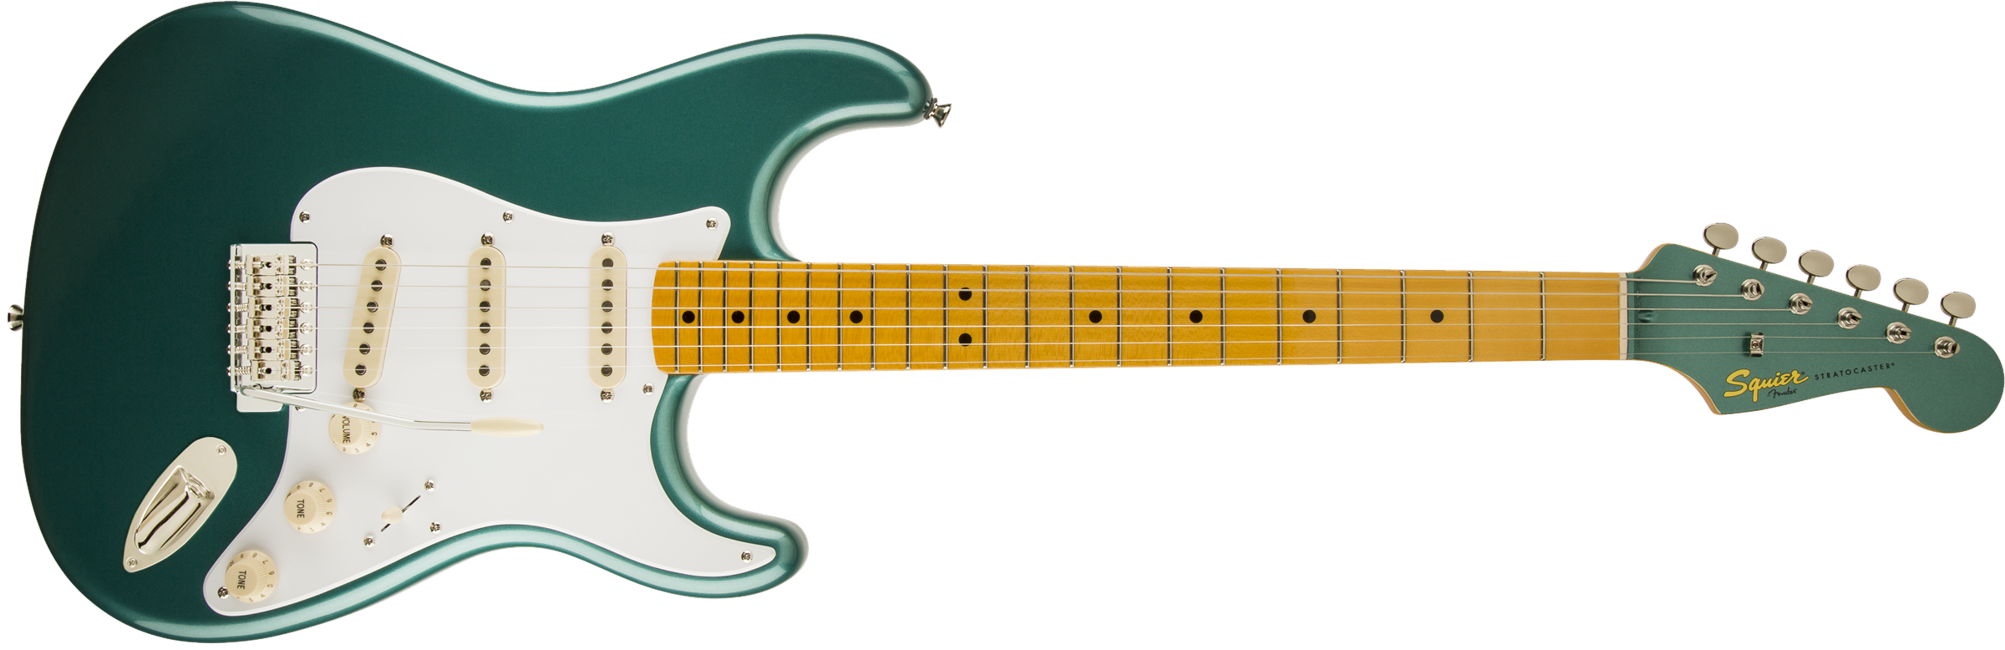 Squier By Fender - Classic Vibe 50's Stratocaster - Elektrisk Guitar (Green Metallic)